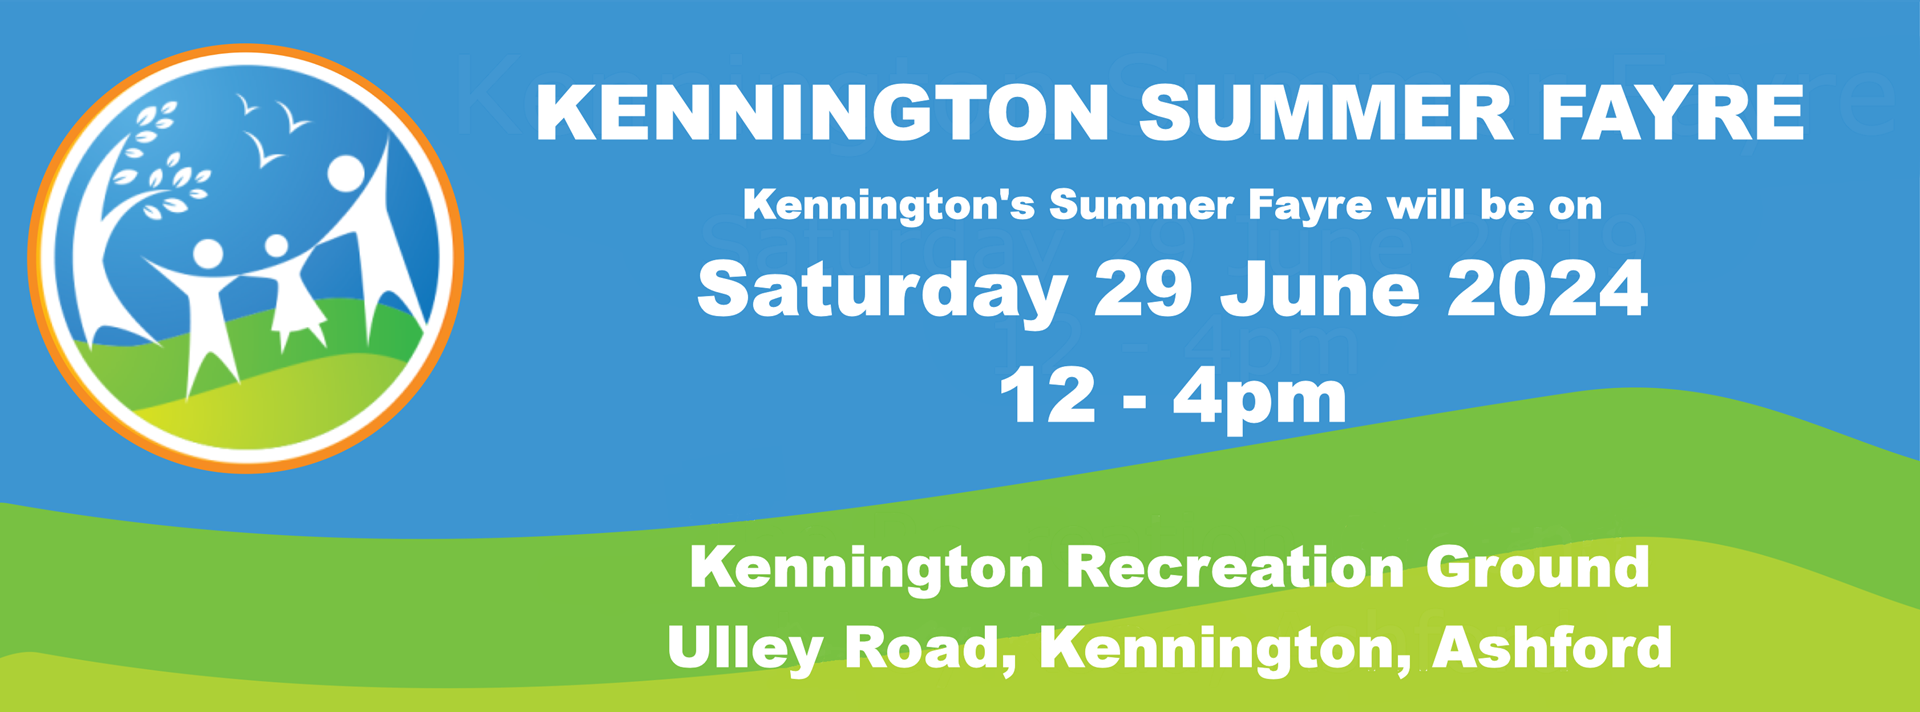 Kennington Summer Fayre Home